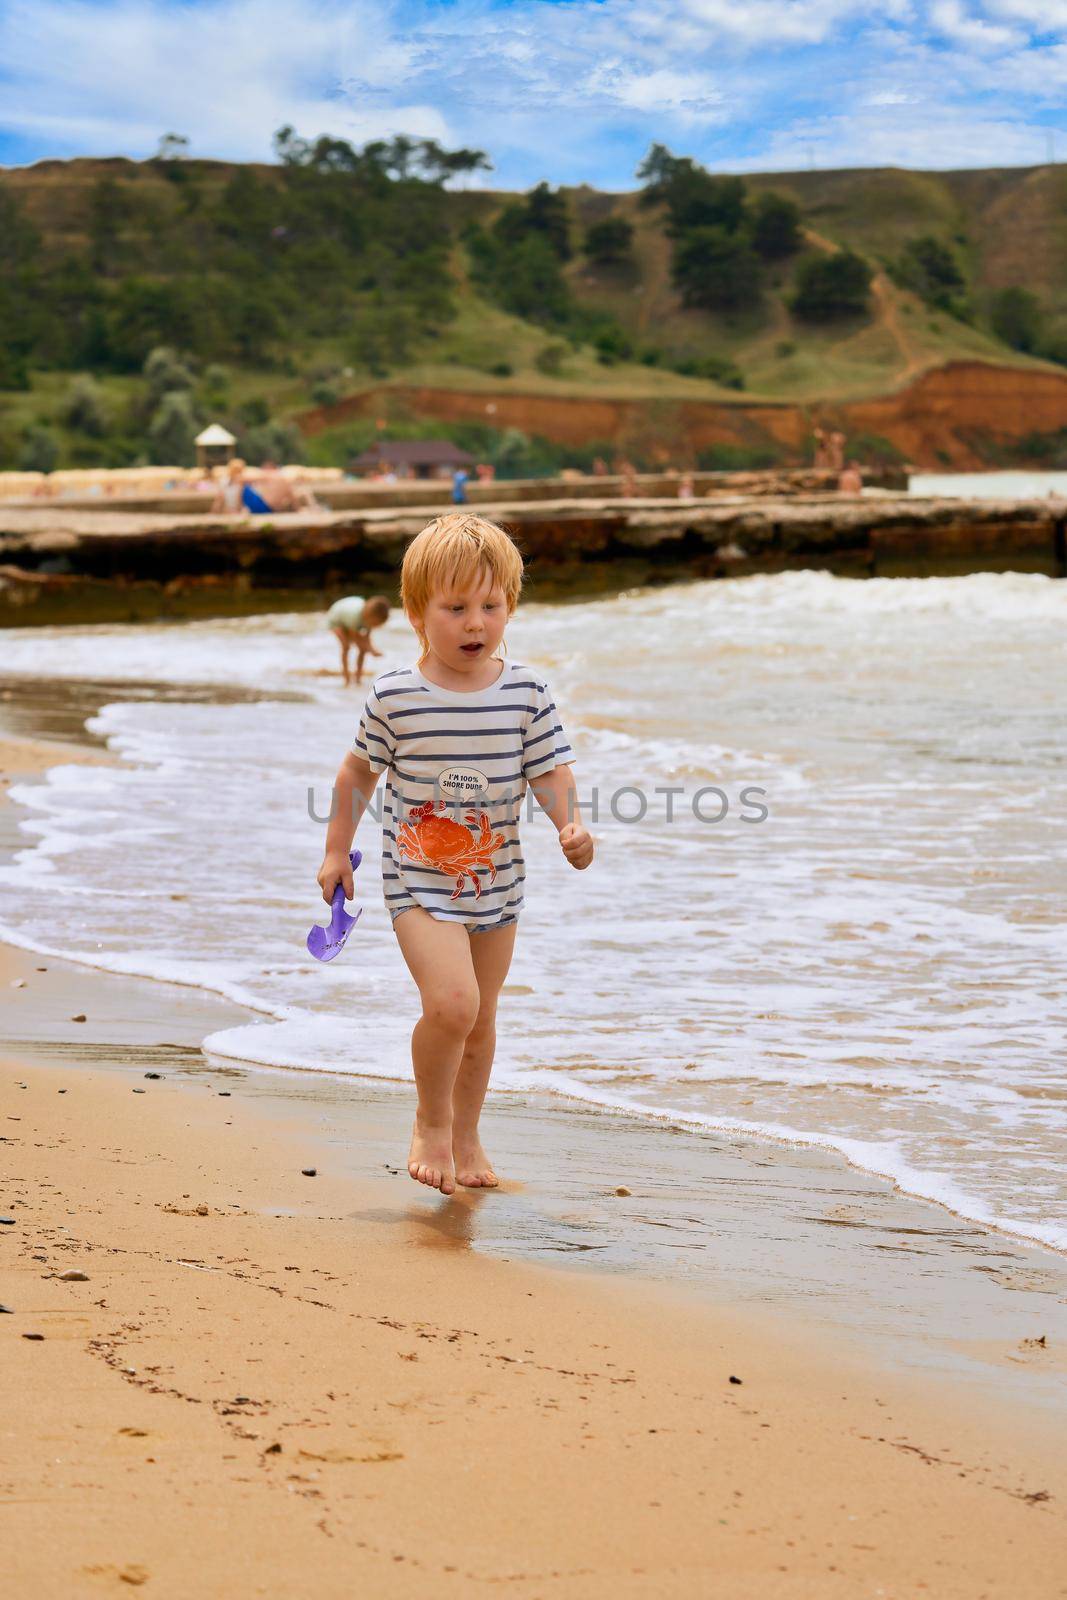 A little boy runs along the sandy beach along the seashore by vizland